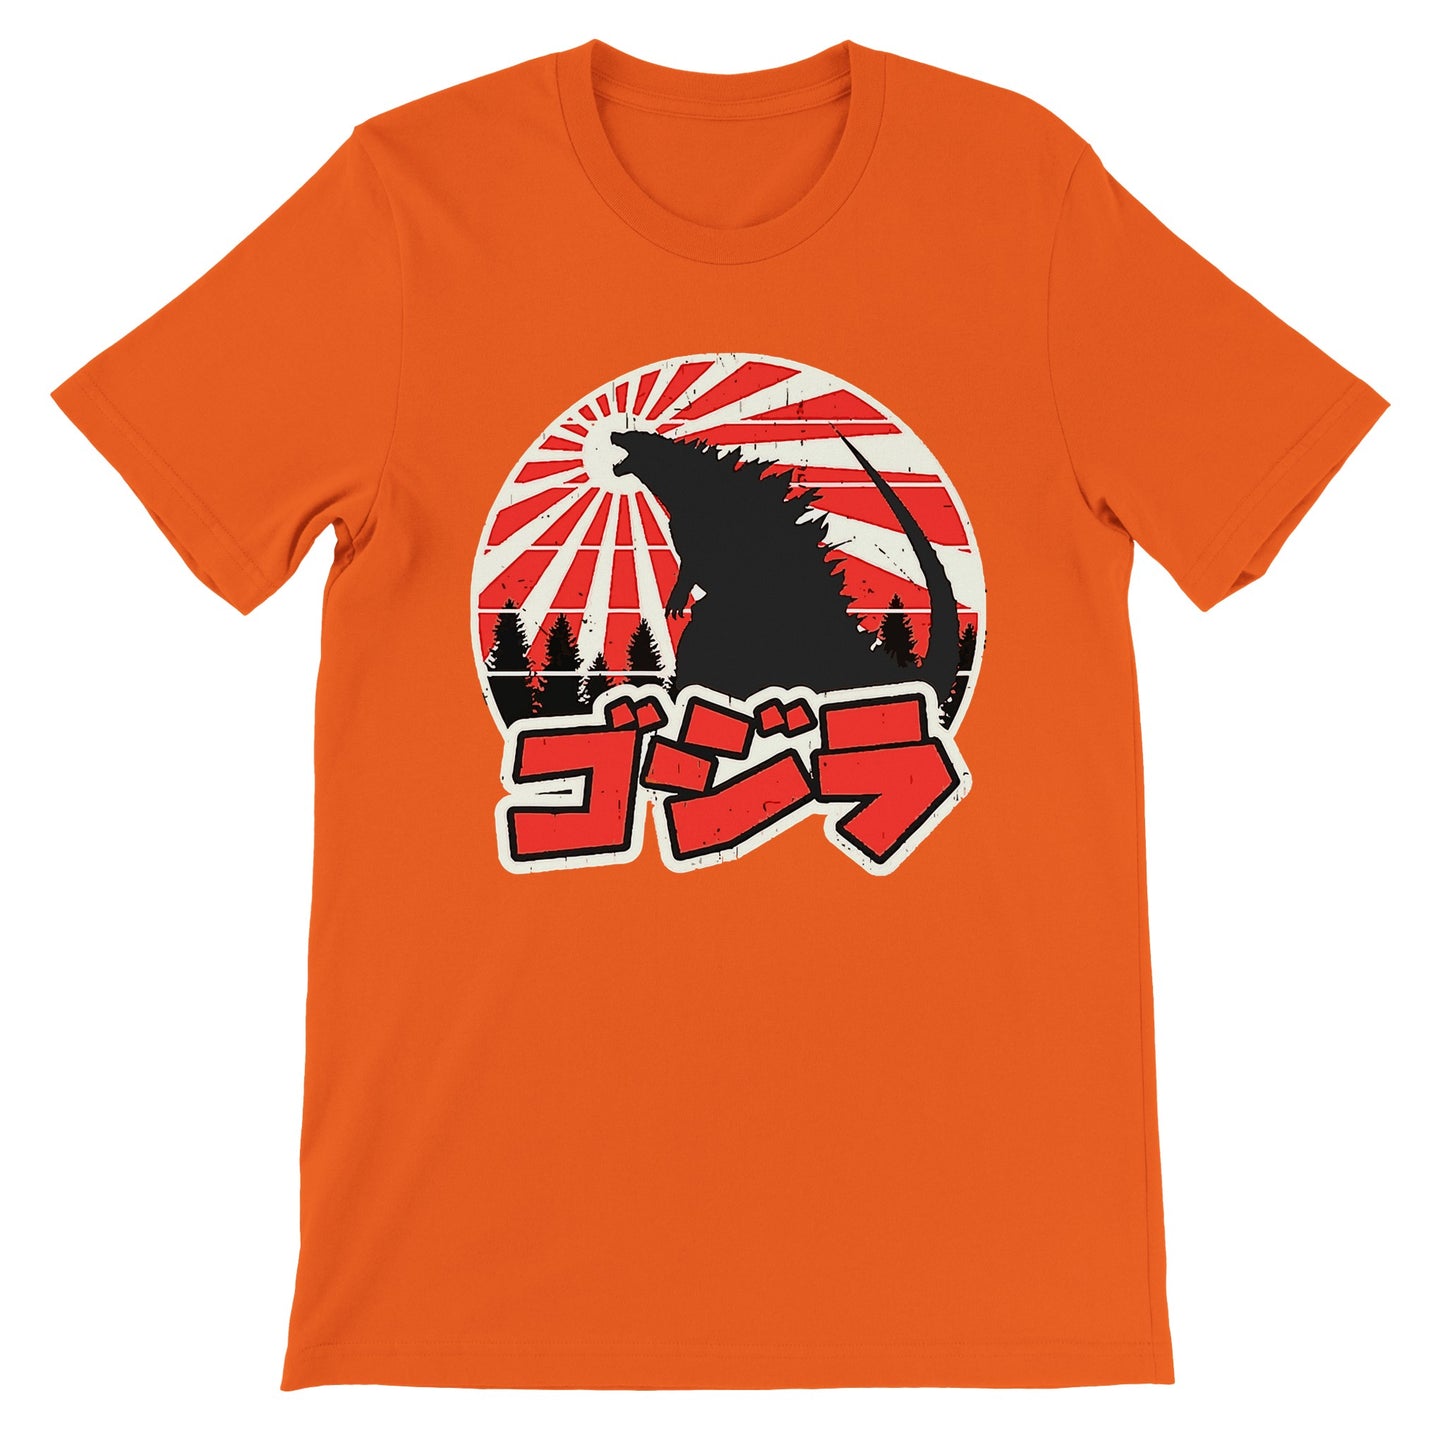 Film T-shirt - Gojira - Godzilla Japan Artwork - Premium Unisex T-shirt